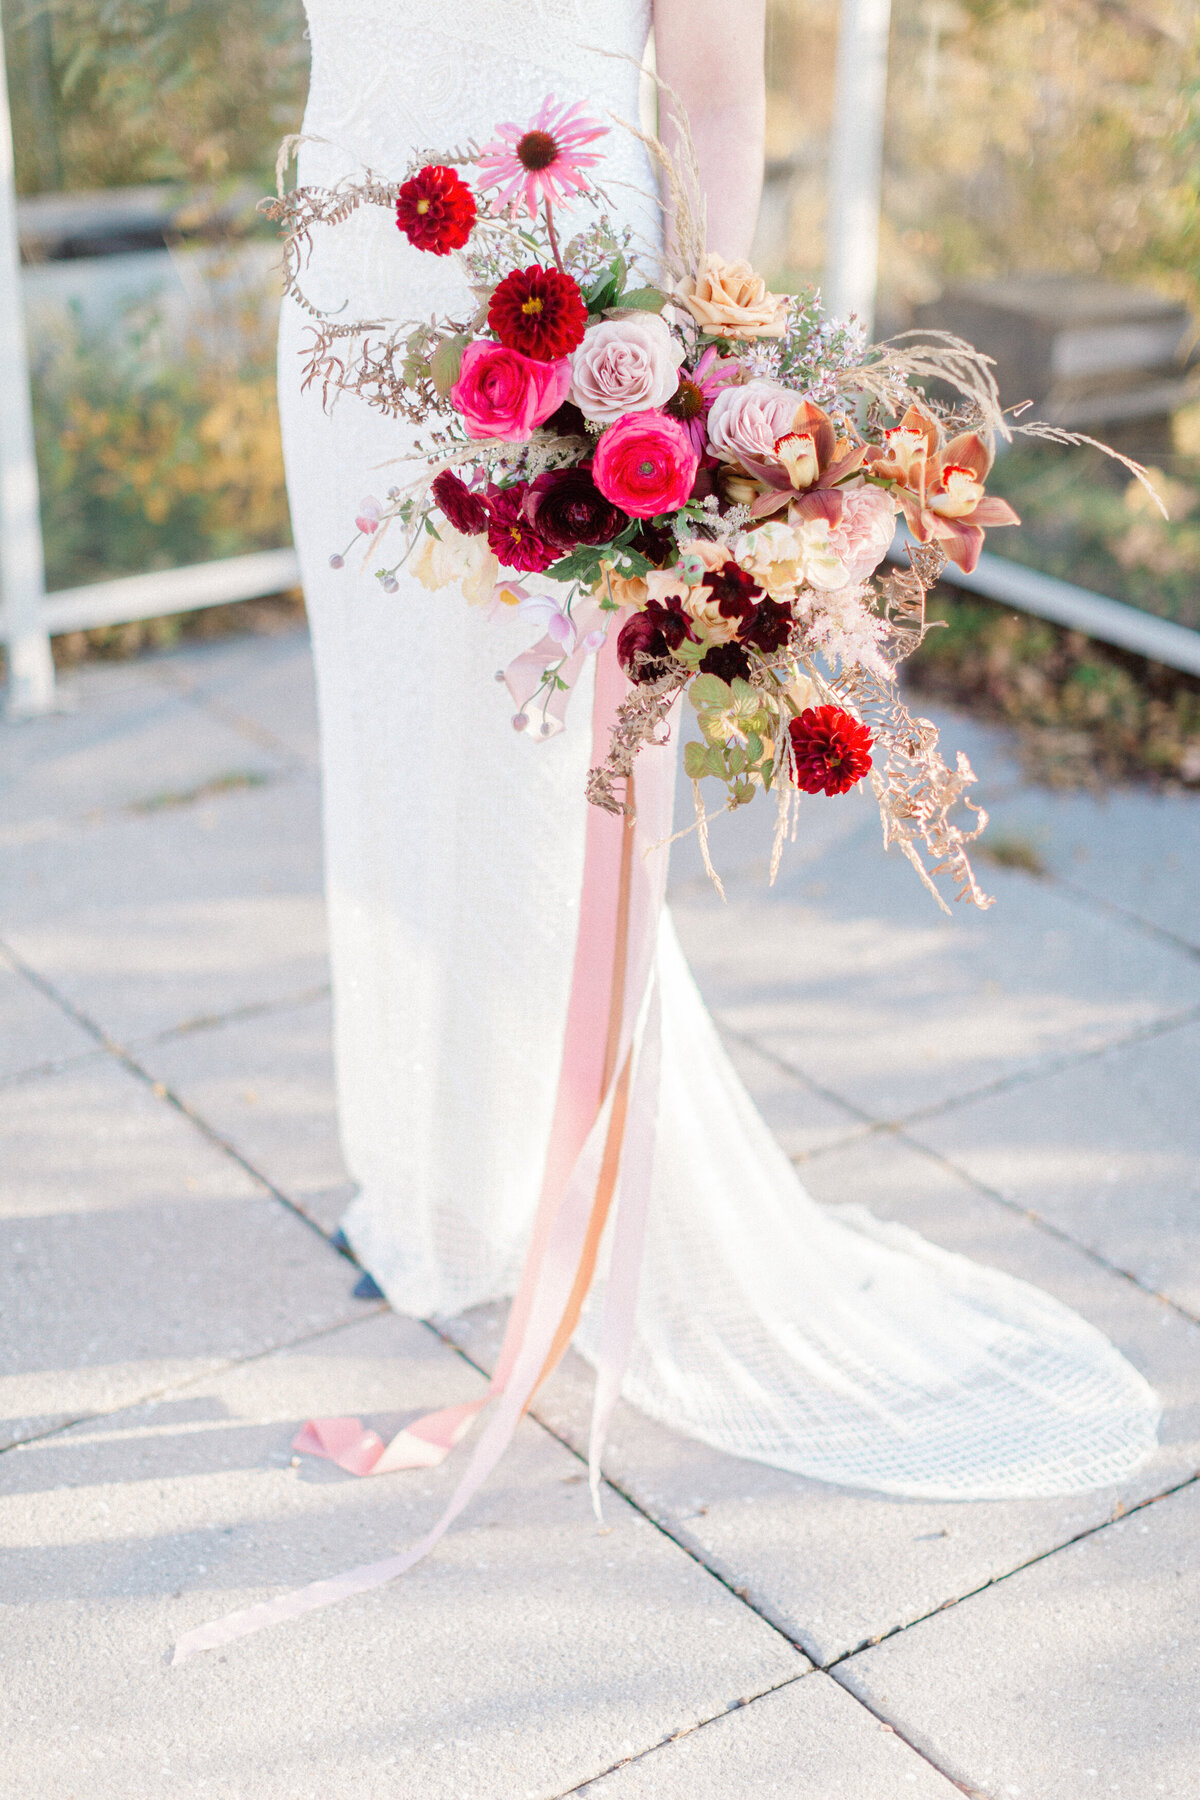 Atelier-Carmel-Wedding-Florist-GALLERY-Bridal-1 copy